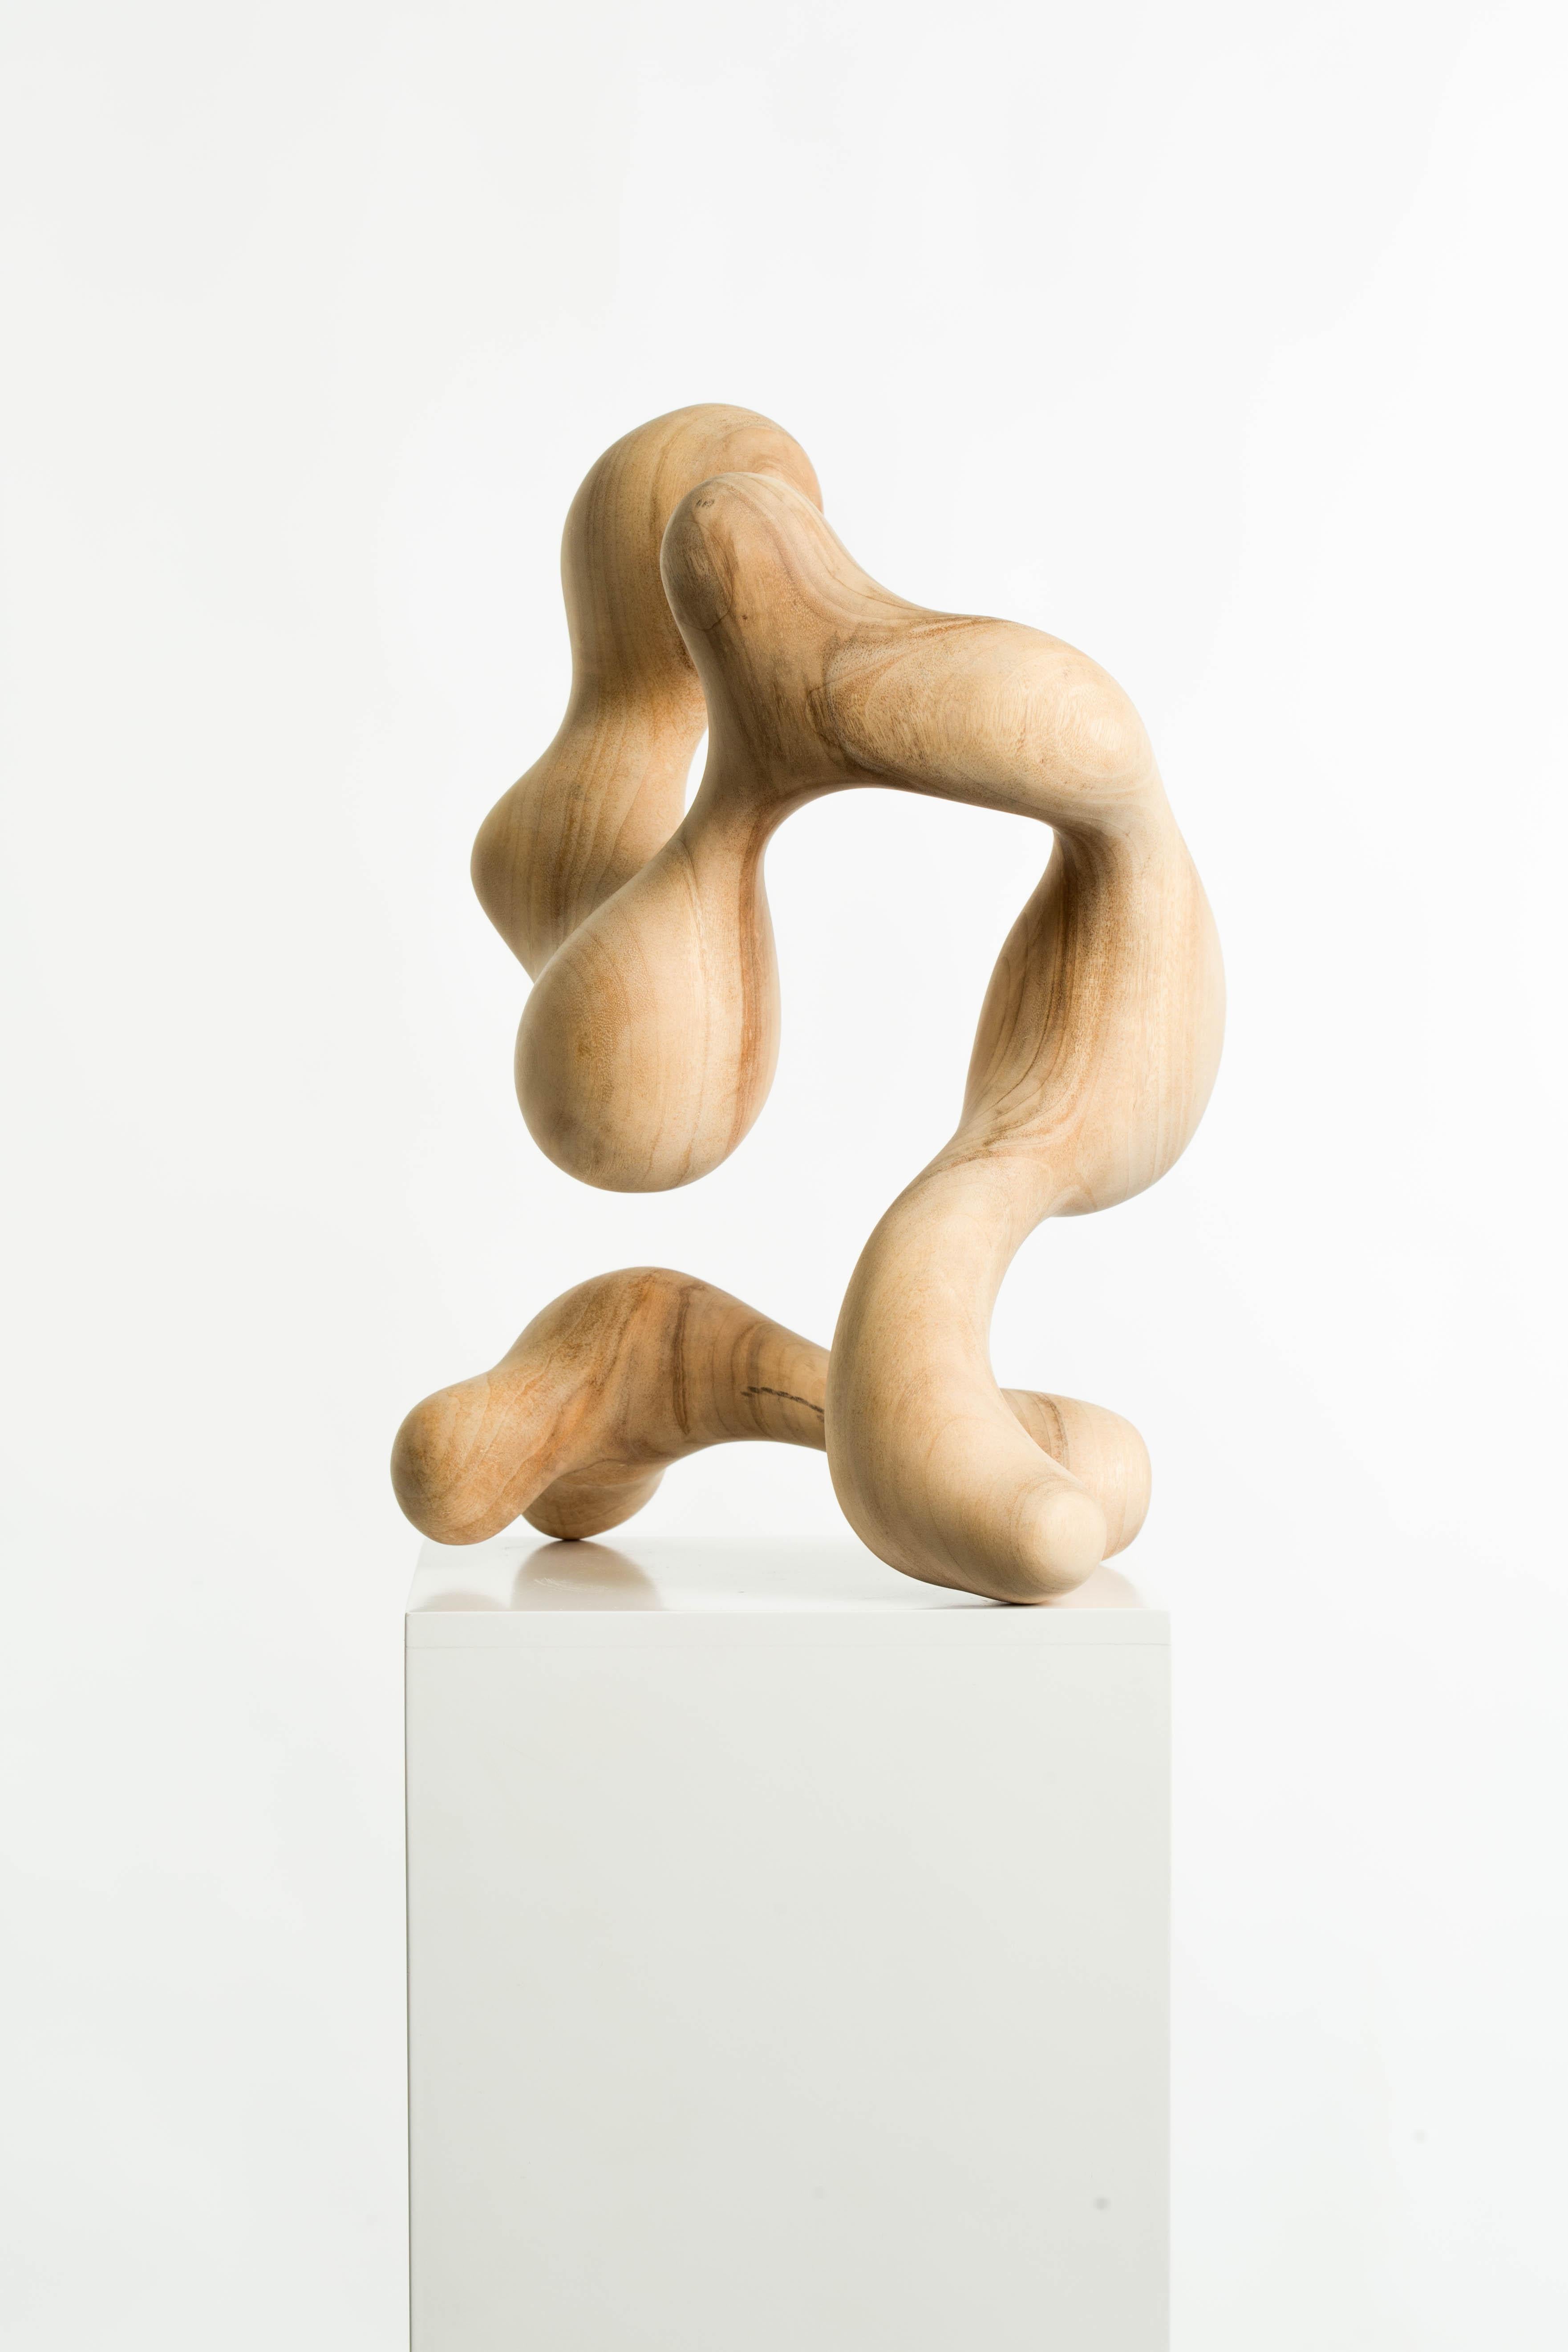 Driaan Claassen Abstract Sculpture - Raw, Wood, Abstract, Contemporary, Modern, Sculpture, Art, Geometric, Form, Flow